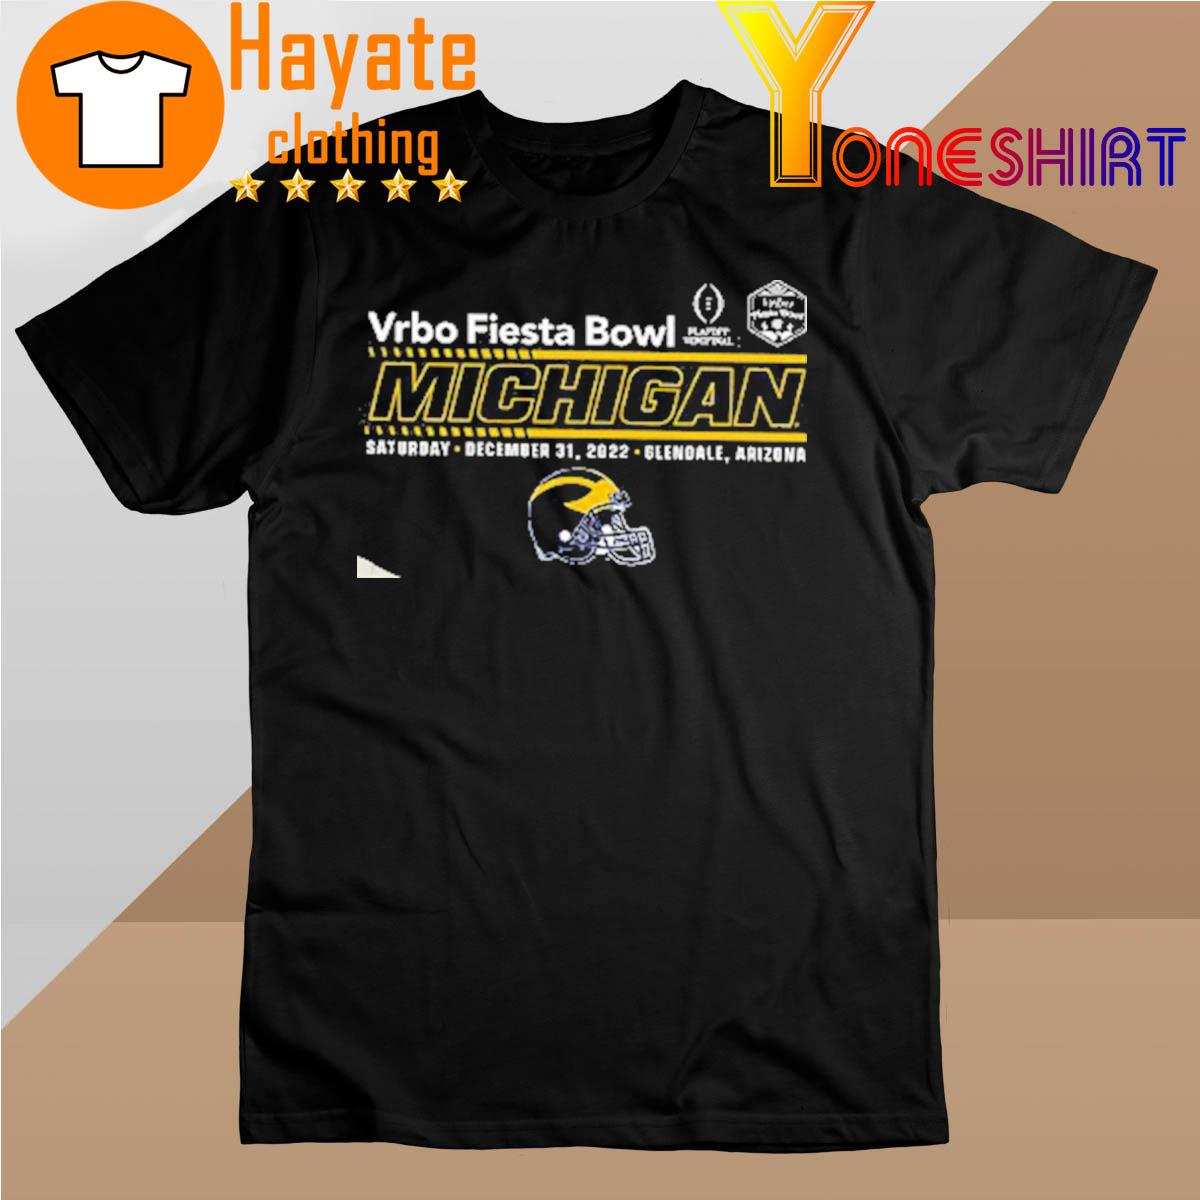 Vrbo Fiesta Bowl Michigan Wolverines 2022 shirt